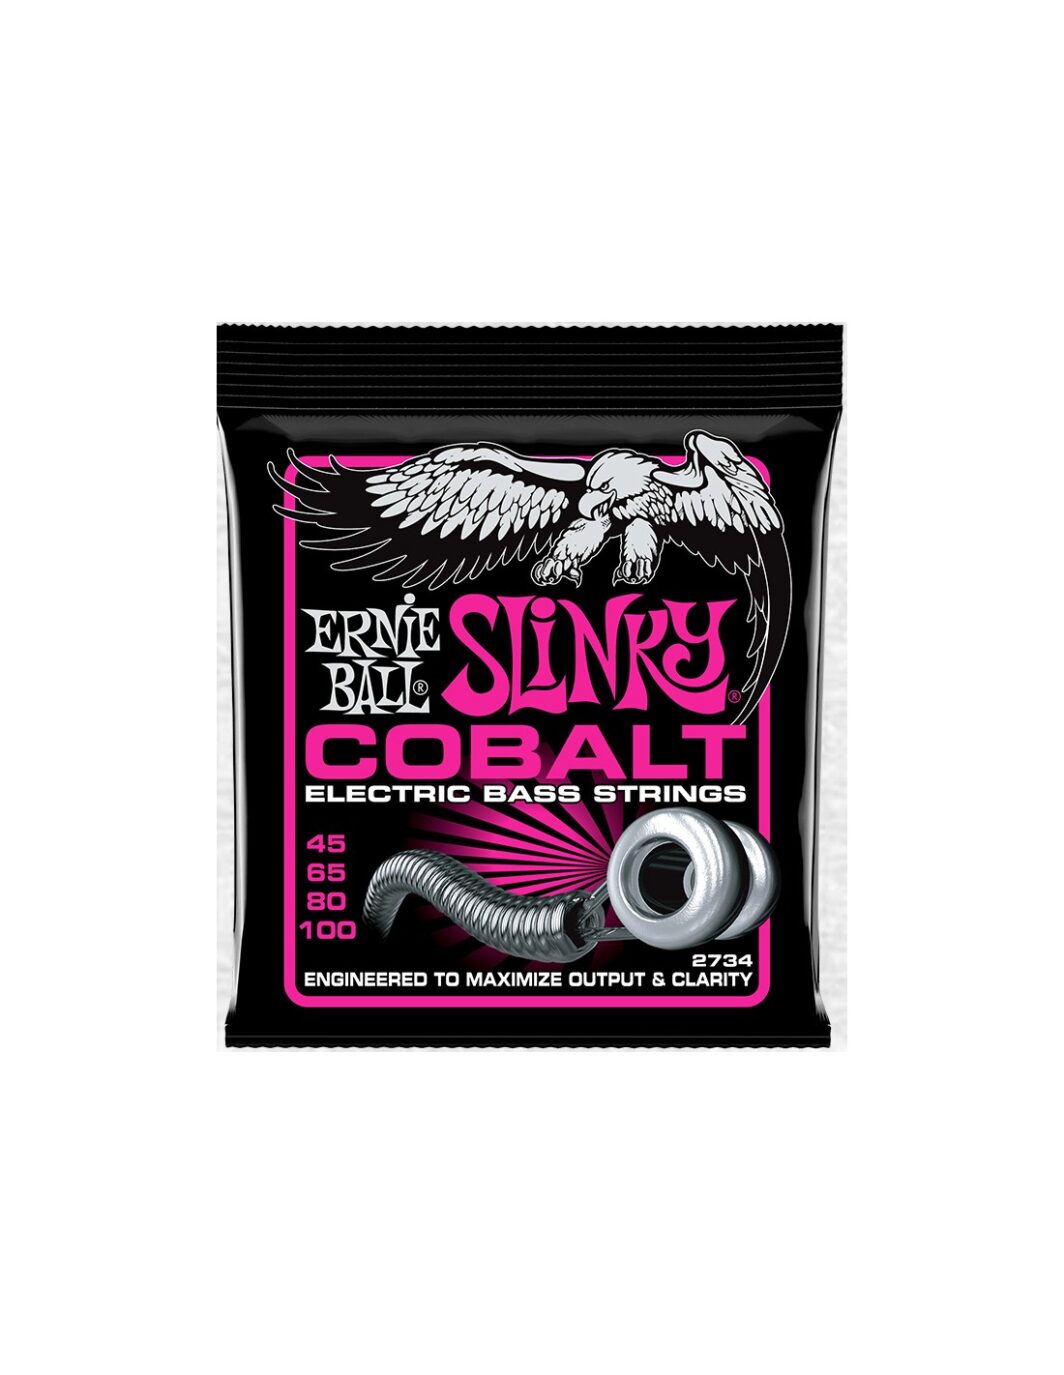 Ernie Ball Slinky Cobalt 2734 45-100 corde per basso elettrico